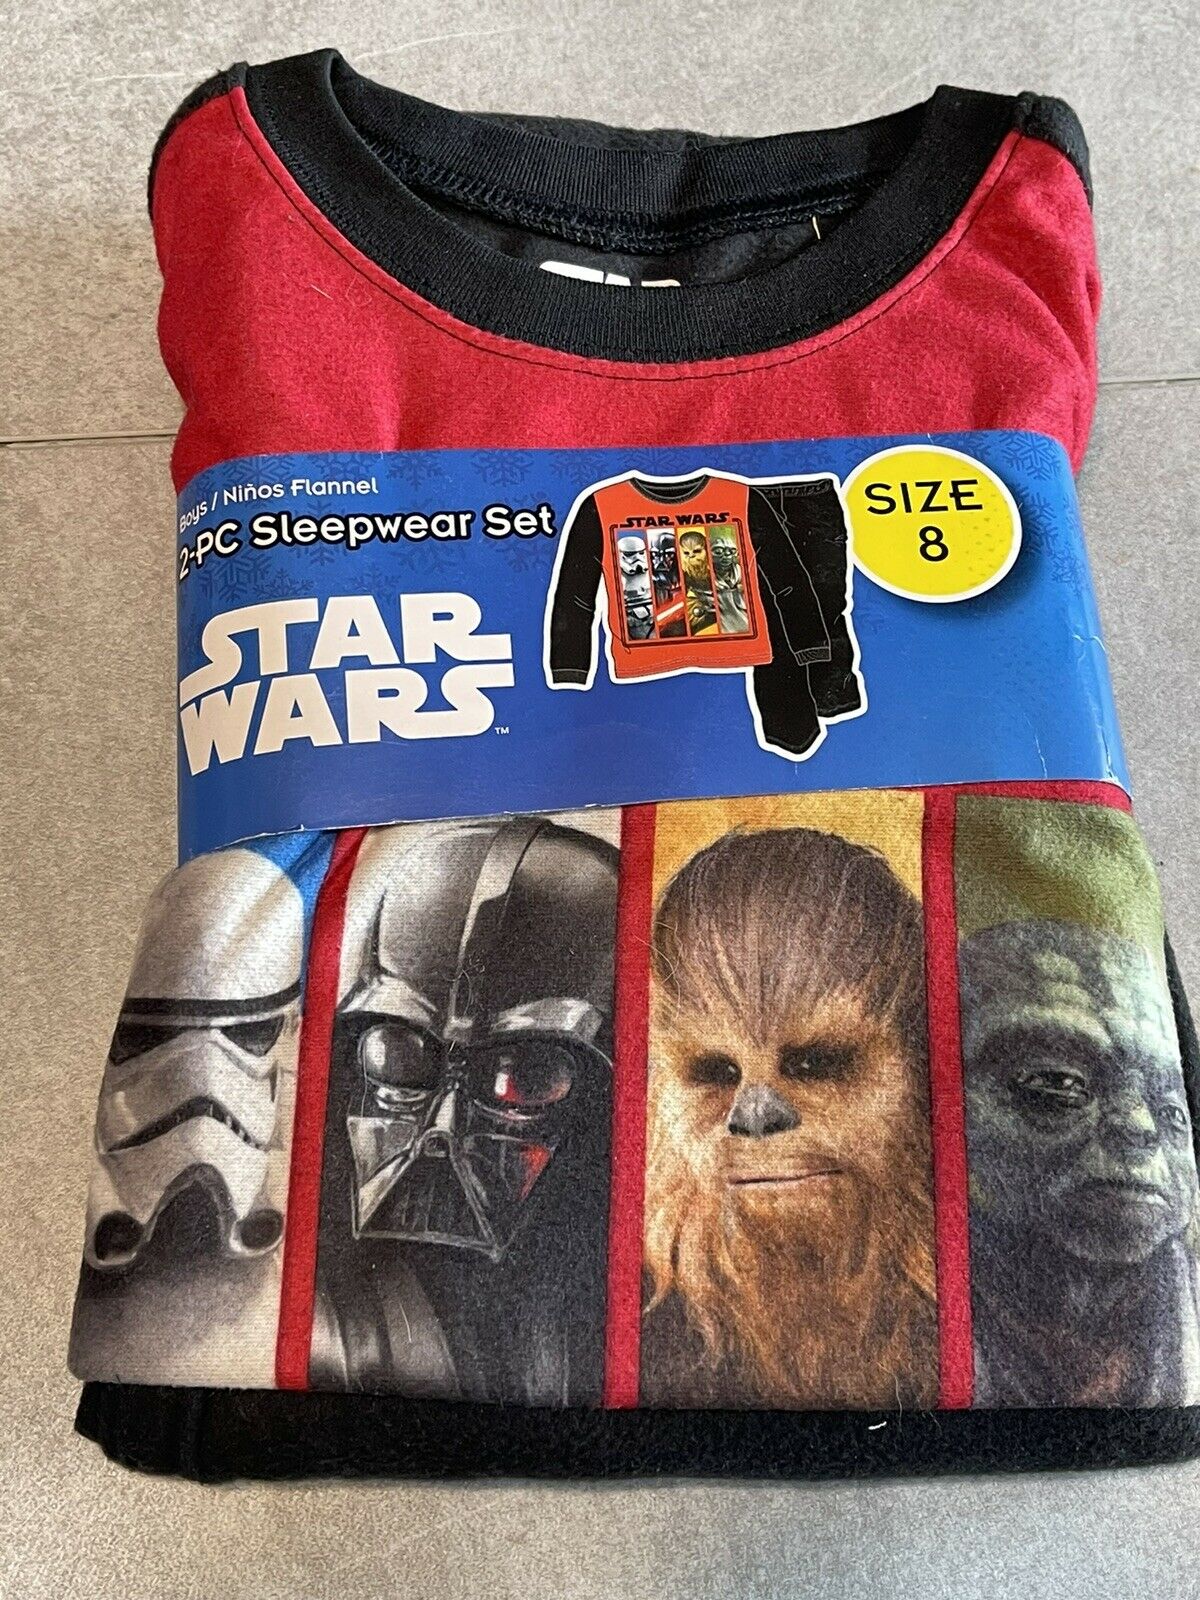 Star Wars Boys 2 Piece Flannel Sleepwear Pajama Set Size 8 Red Black Long Sleeve